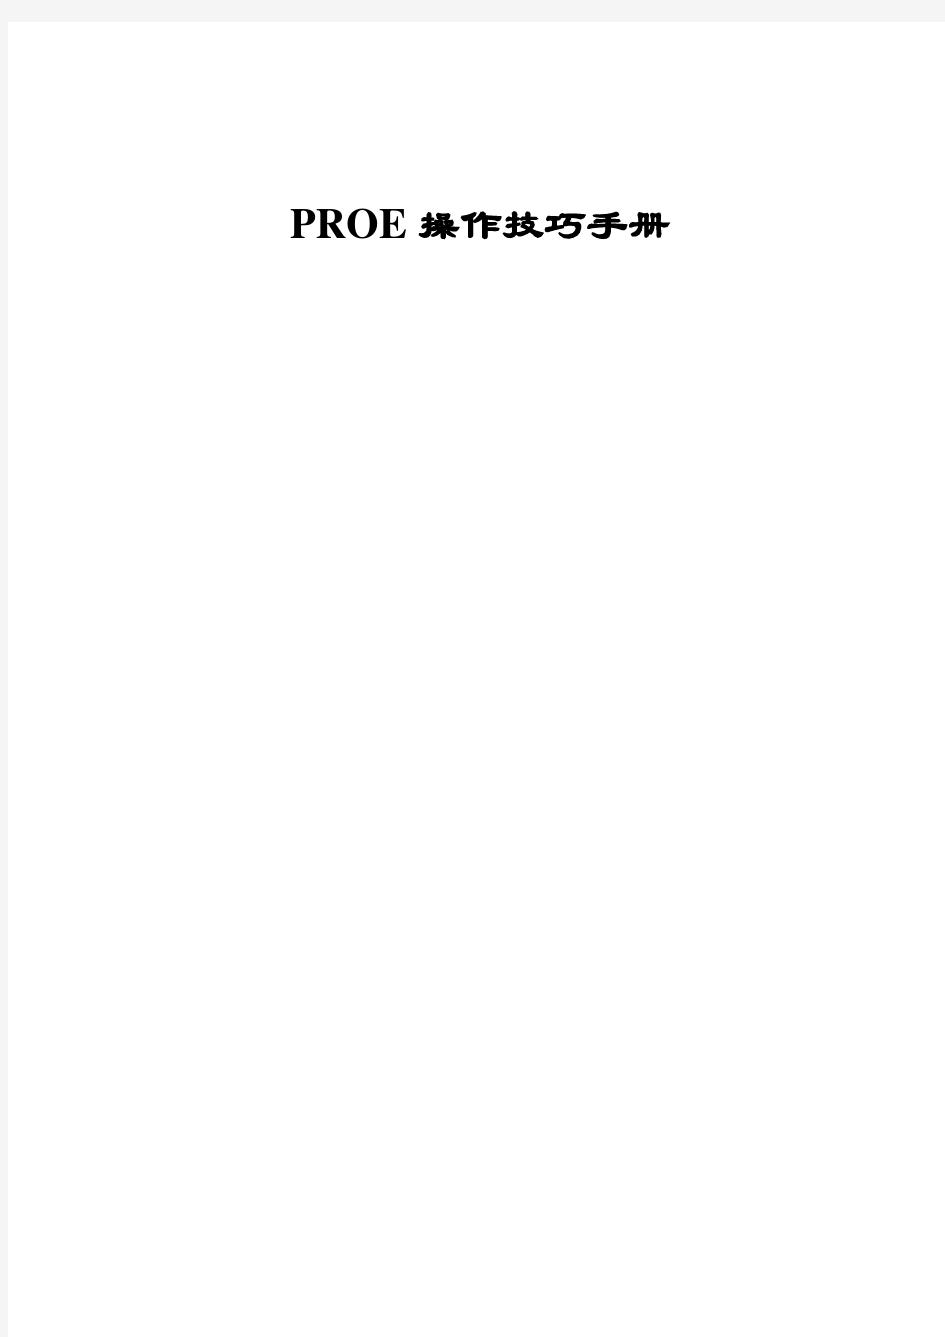 ProE操作技巧手册